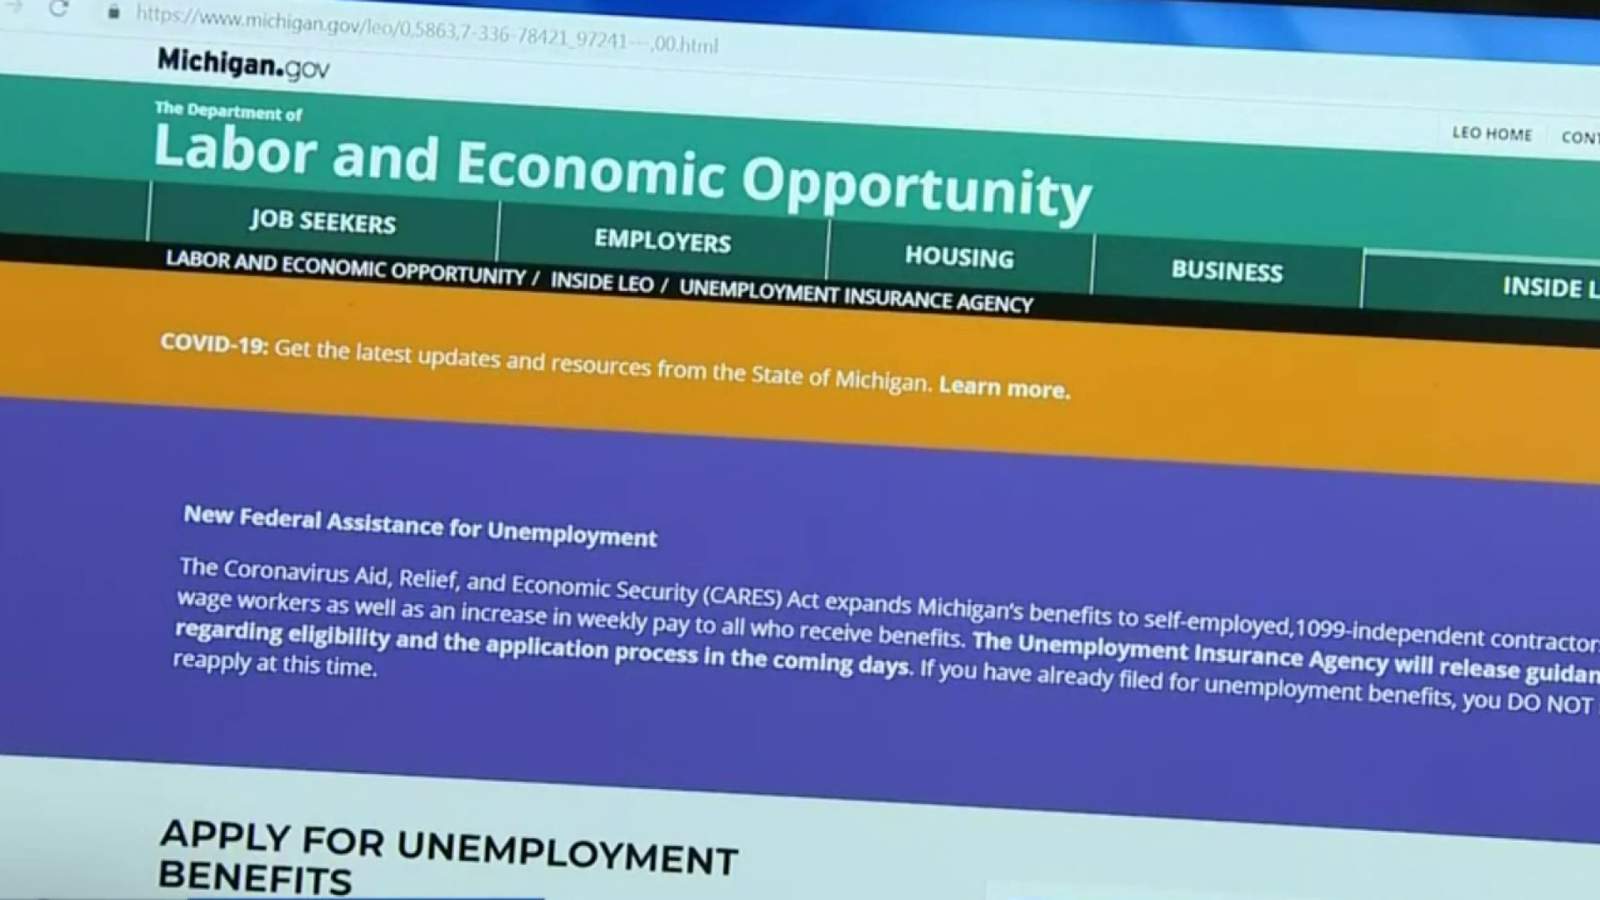 Michigan unemployment help and resources -- updated list